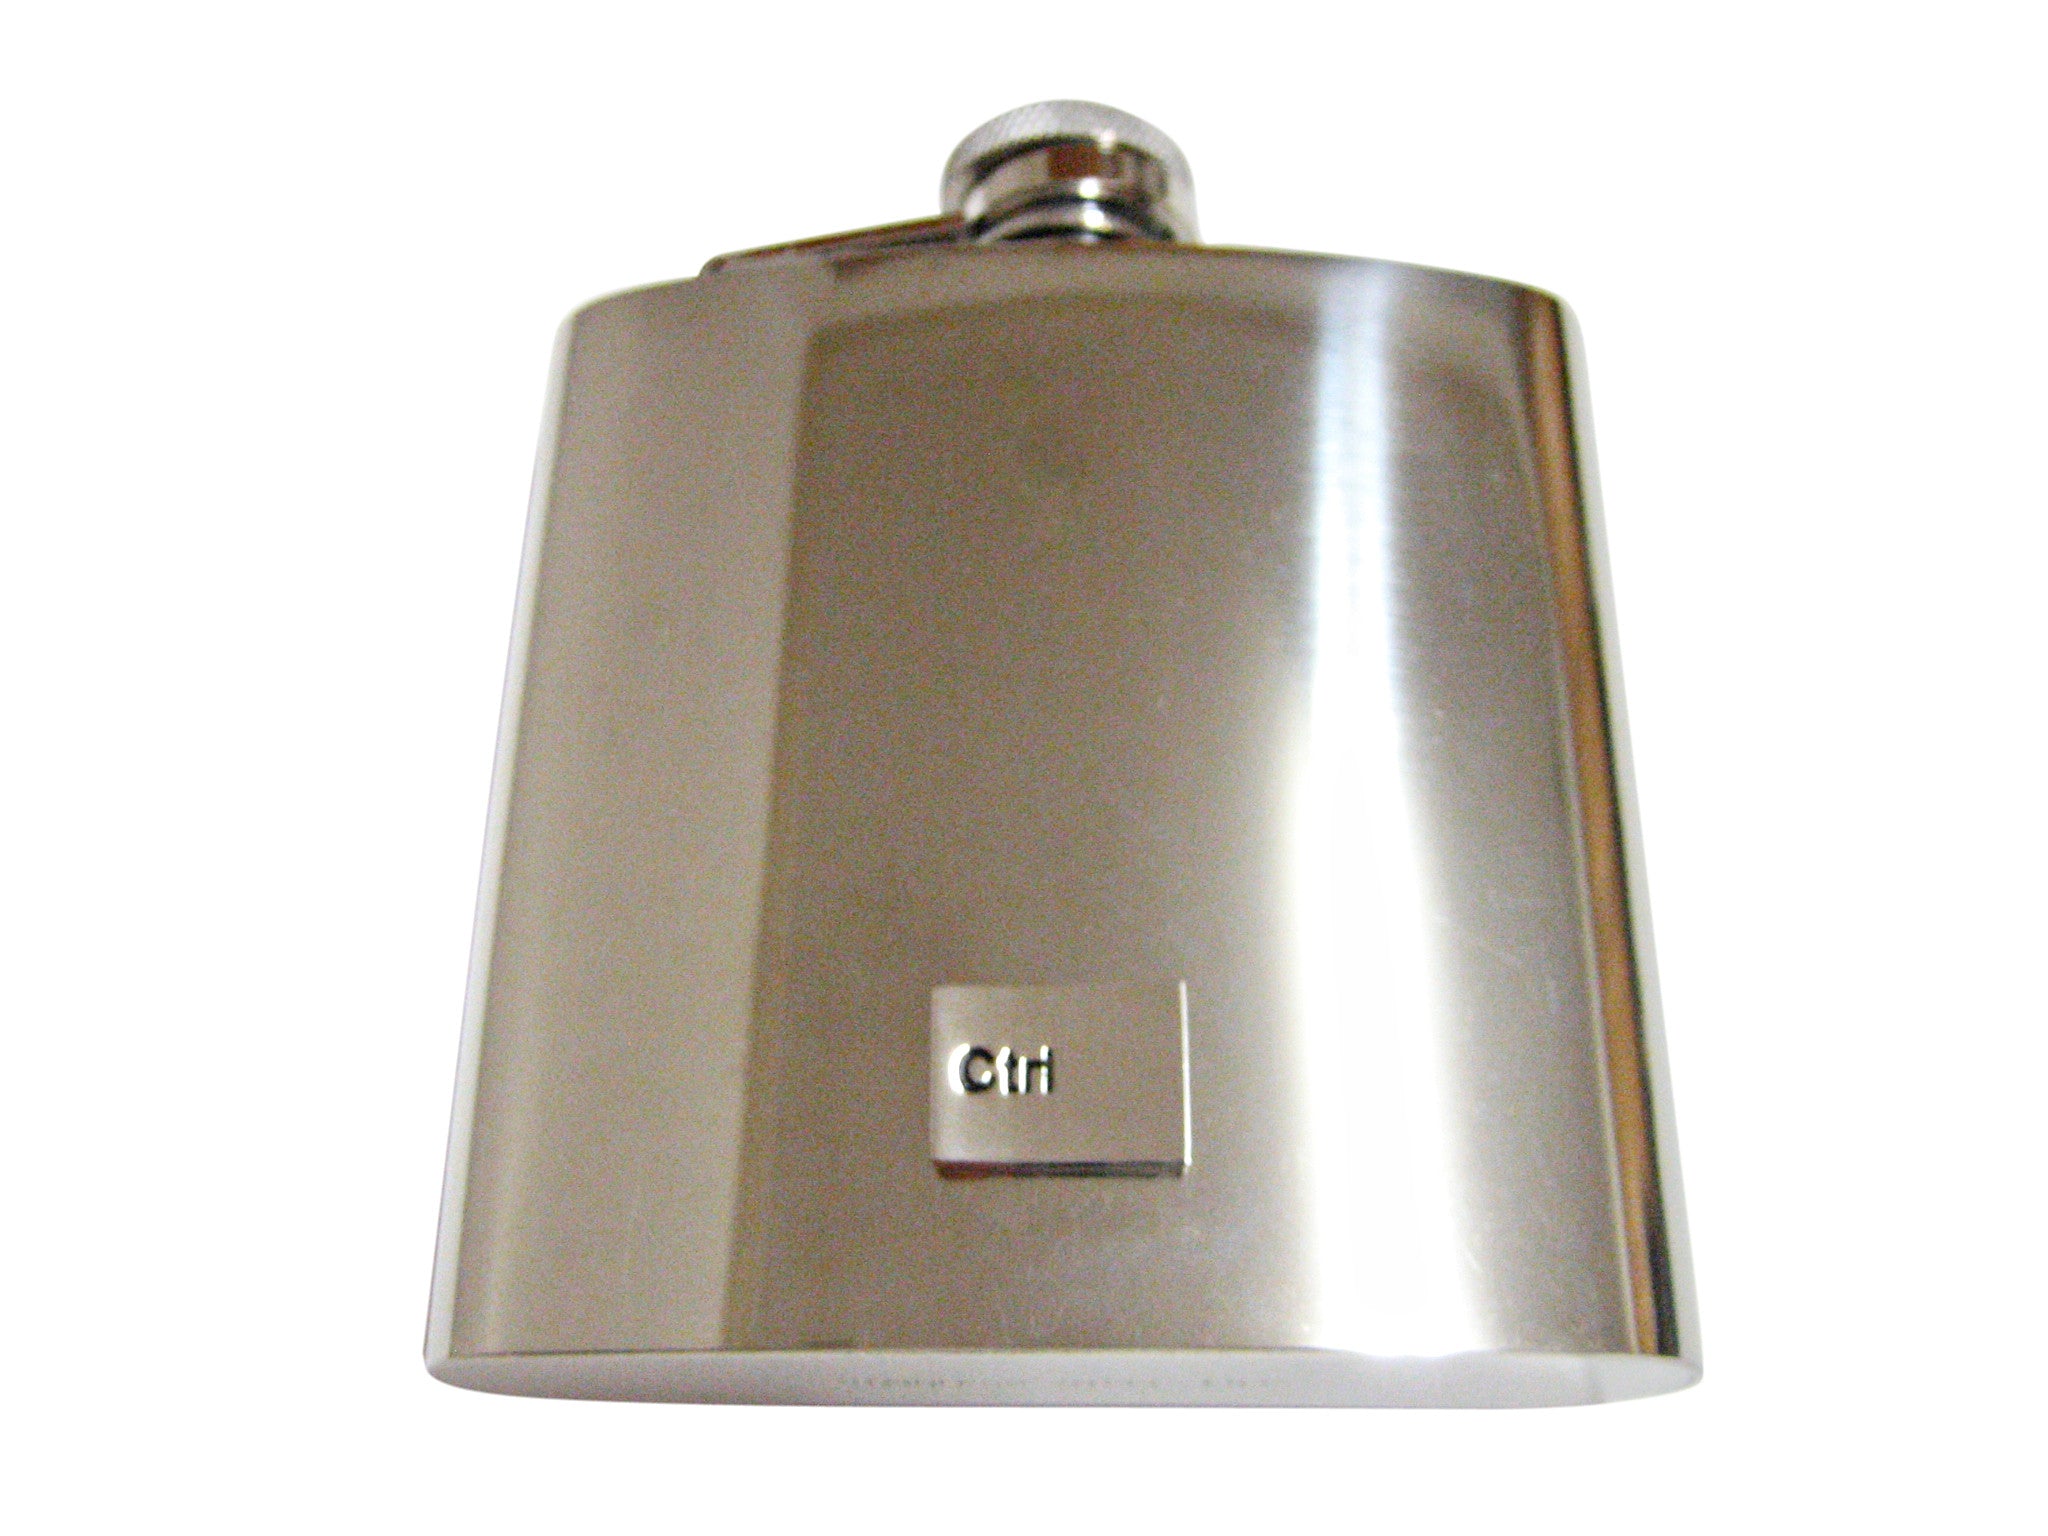 Ctrl Key 6 Oz. Stainless Steel Flask